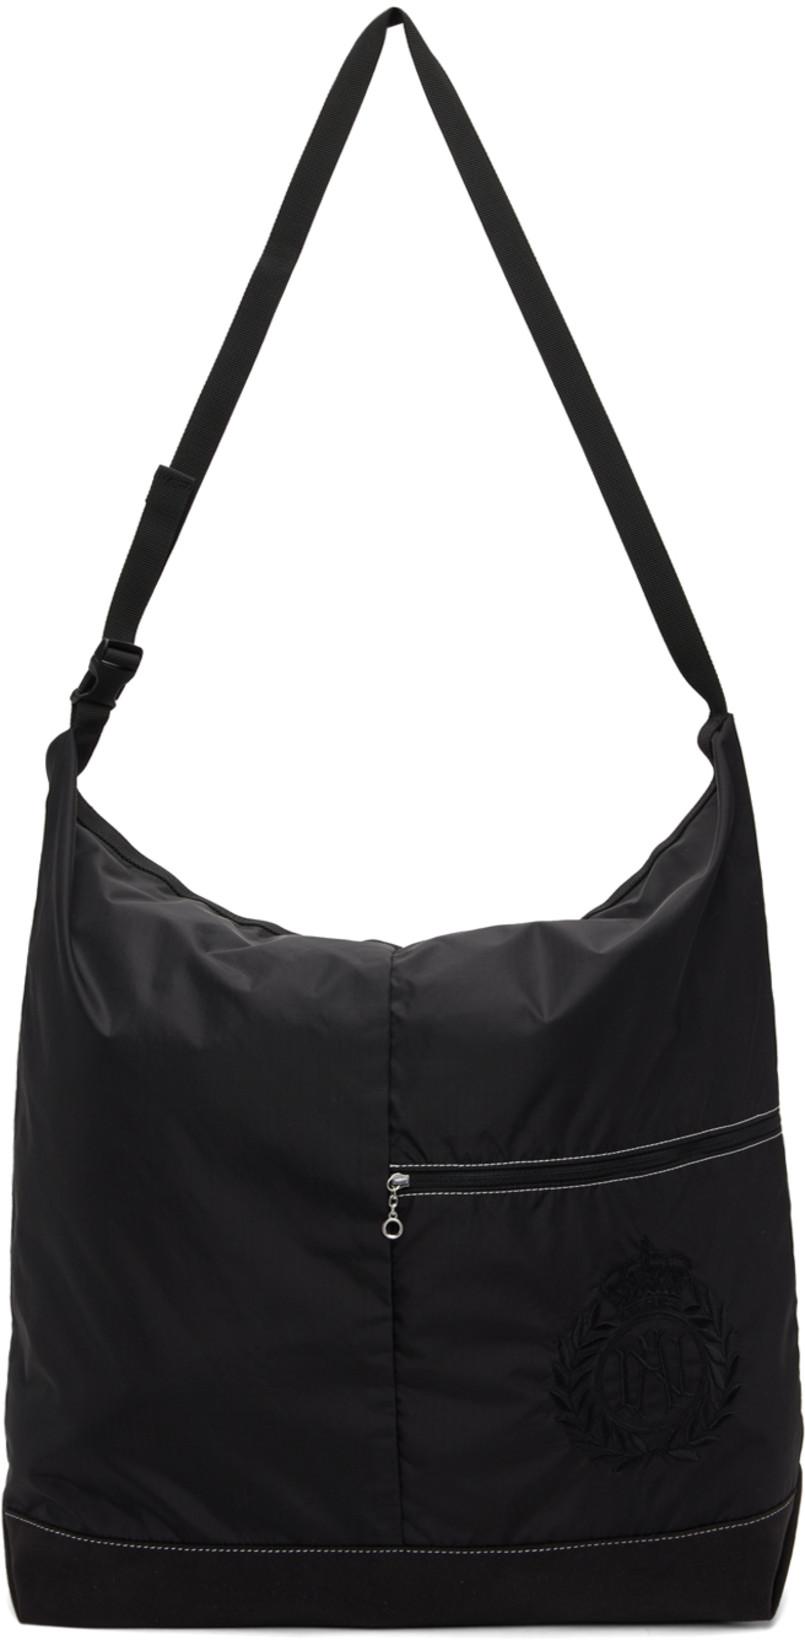 Black Nanamica Edition Utility Shoulder Bag by AWAKE NY